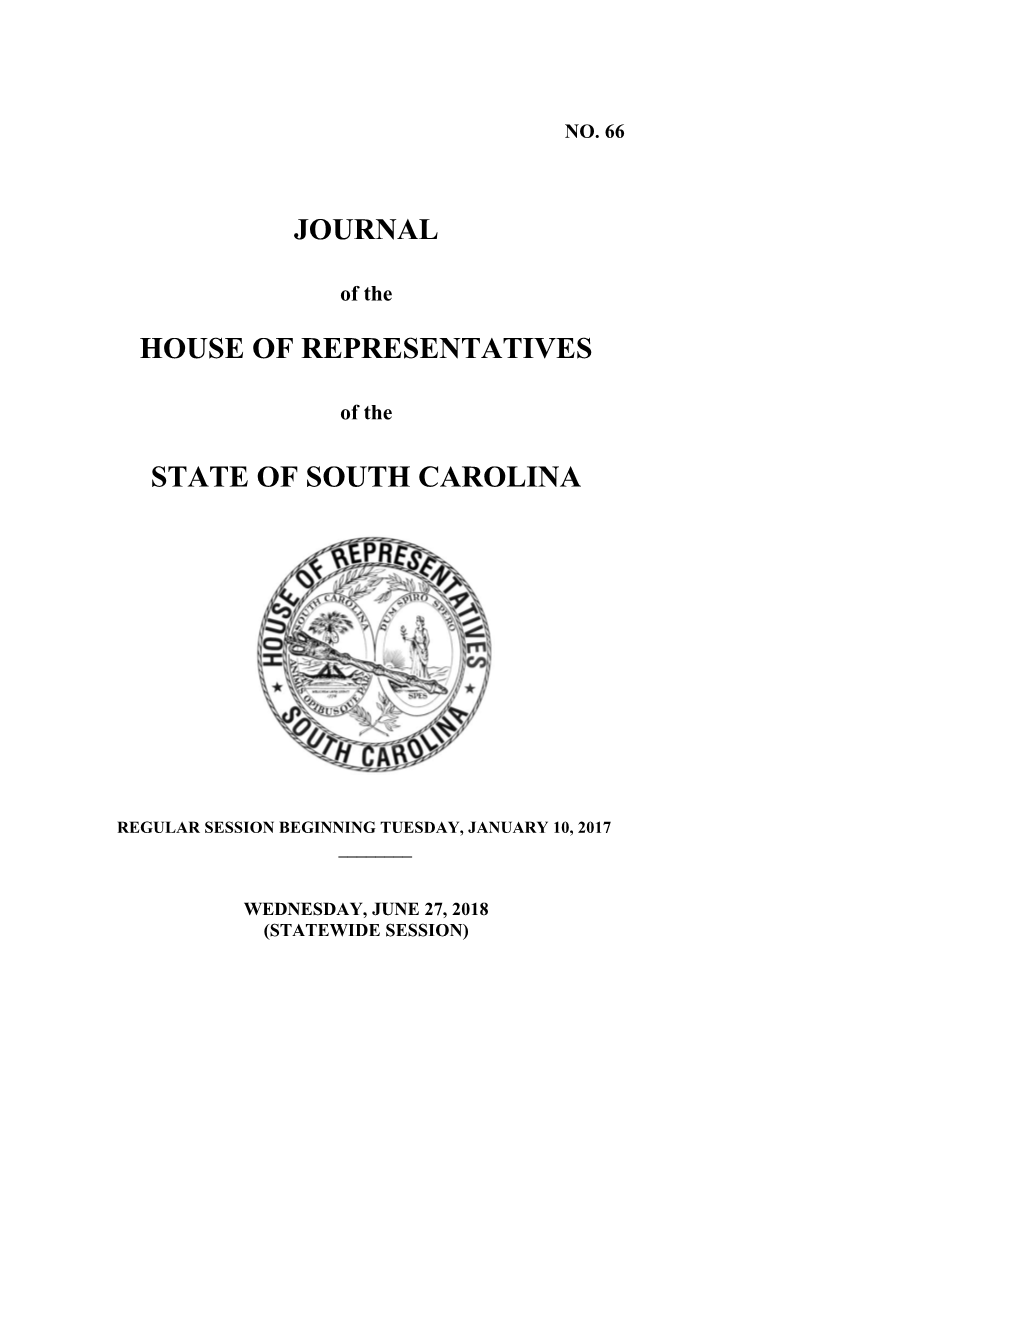 House Journal for 6/27/2018 - South Carolina Legislature Online